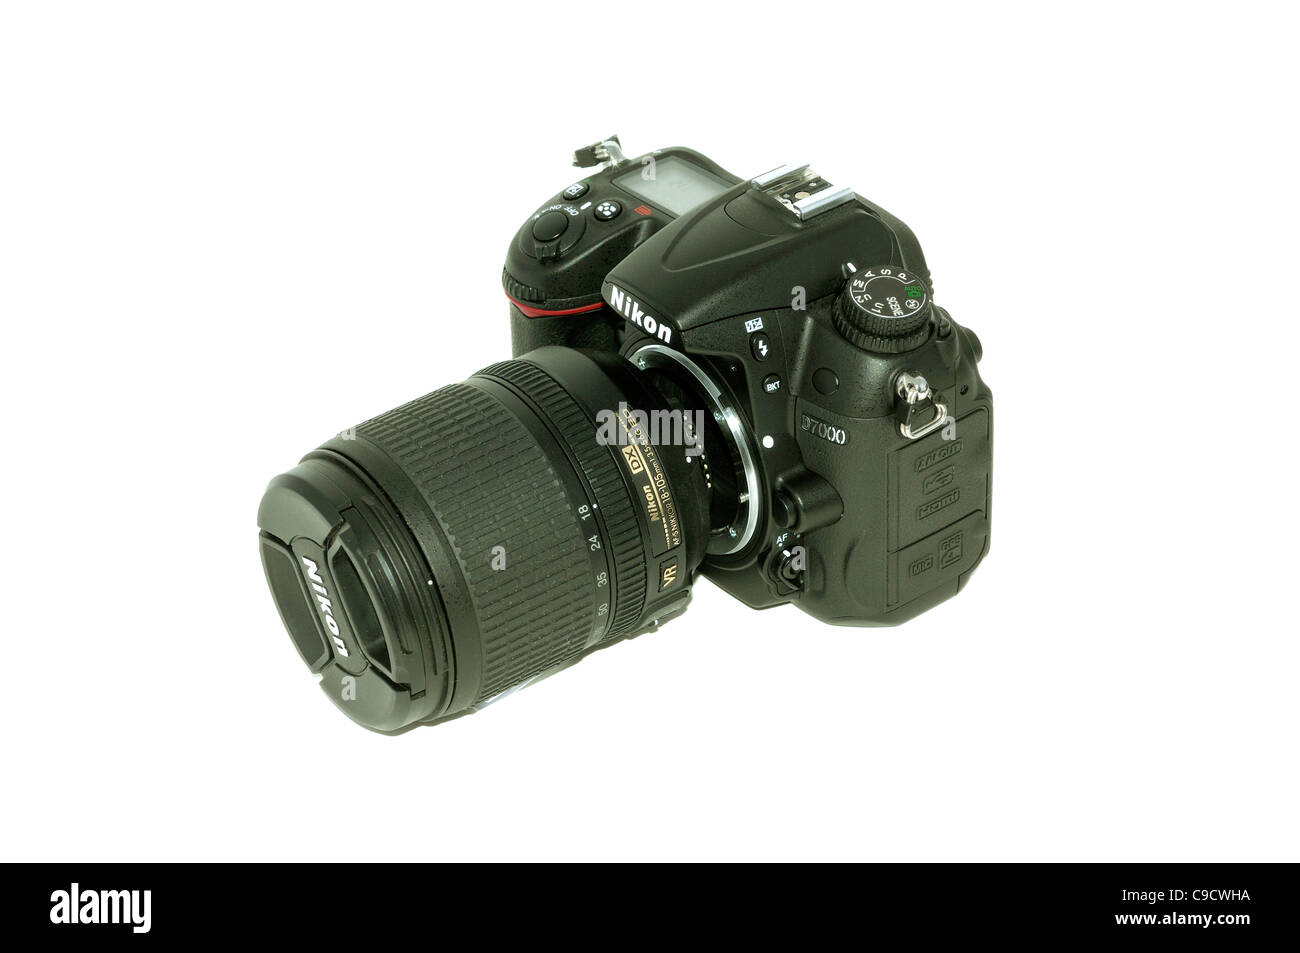 Nikon d7000 fotografías e imágenes de alta resolución - Alamy